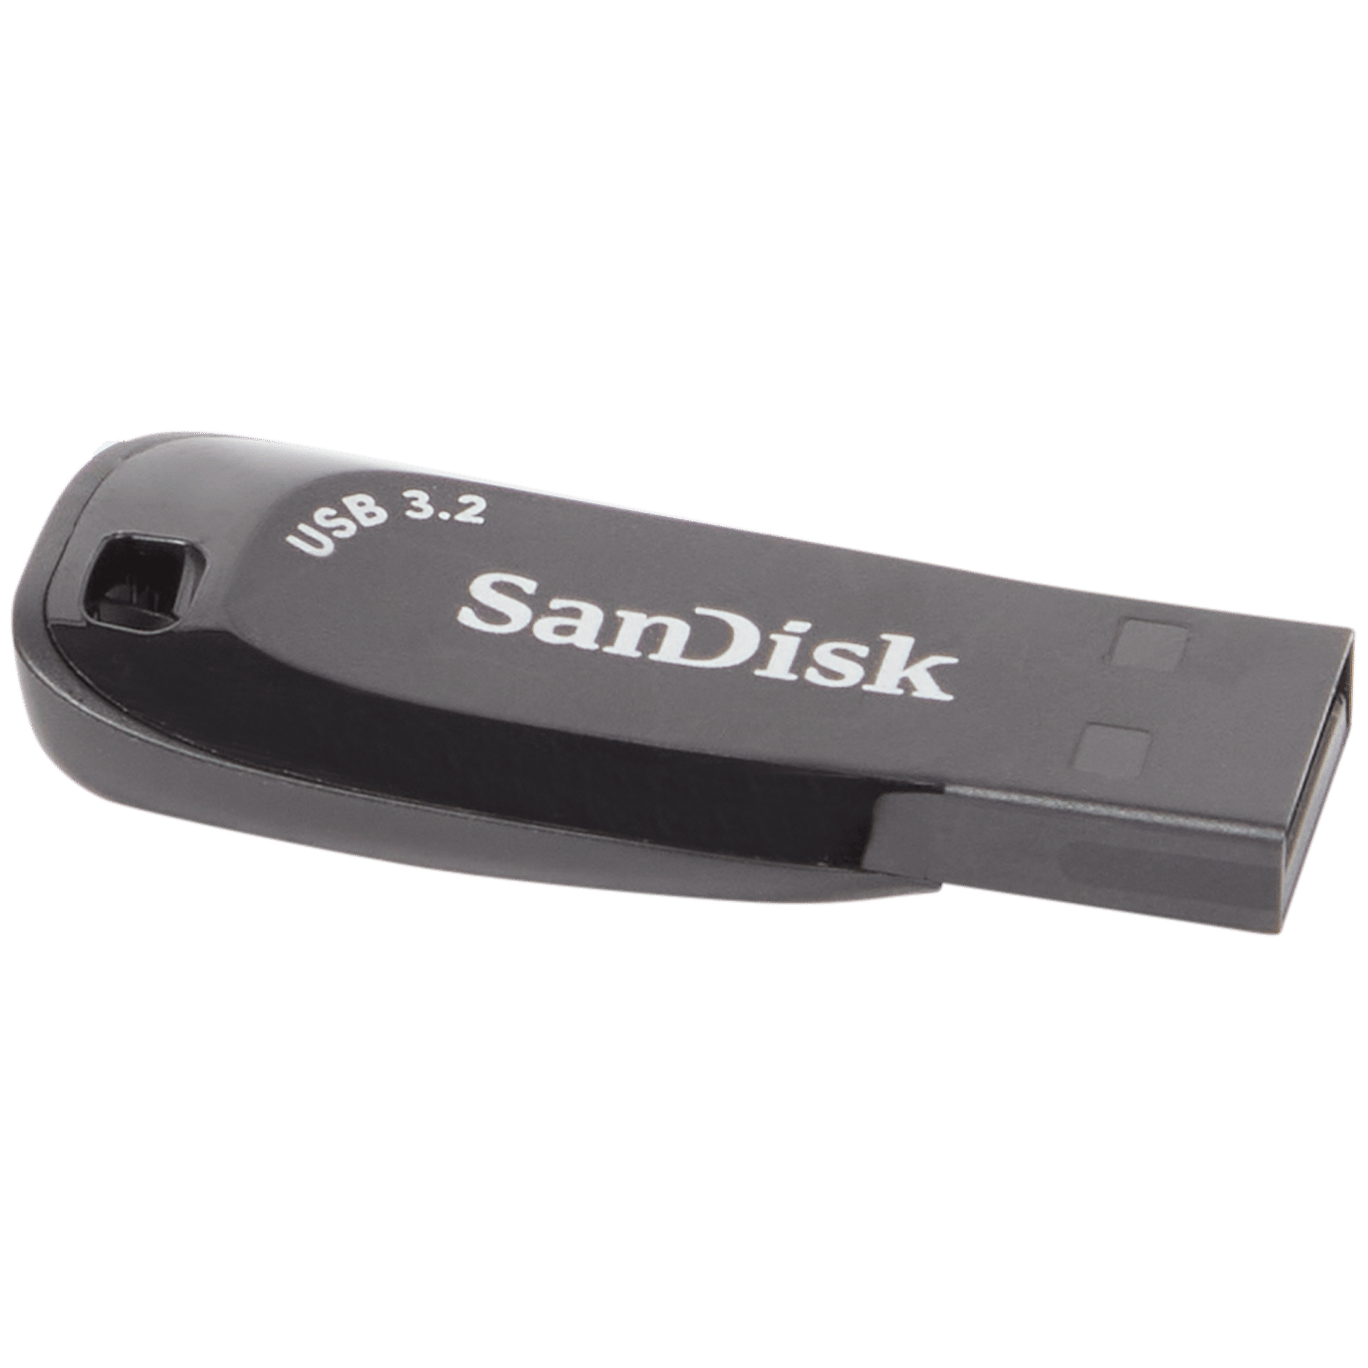 Nośnik USB SanDisk Ultra Shift